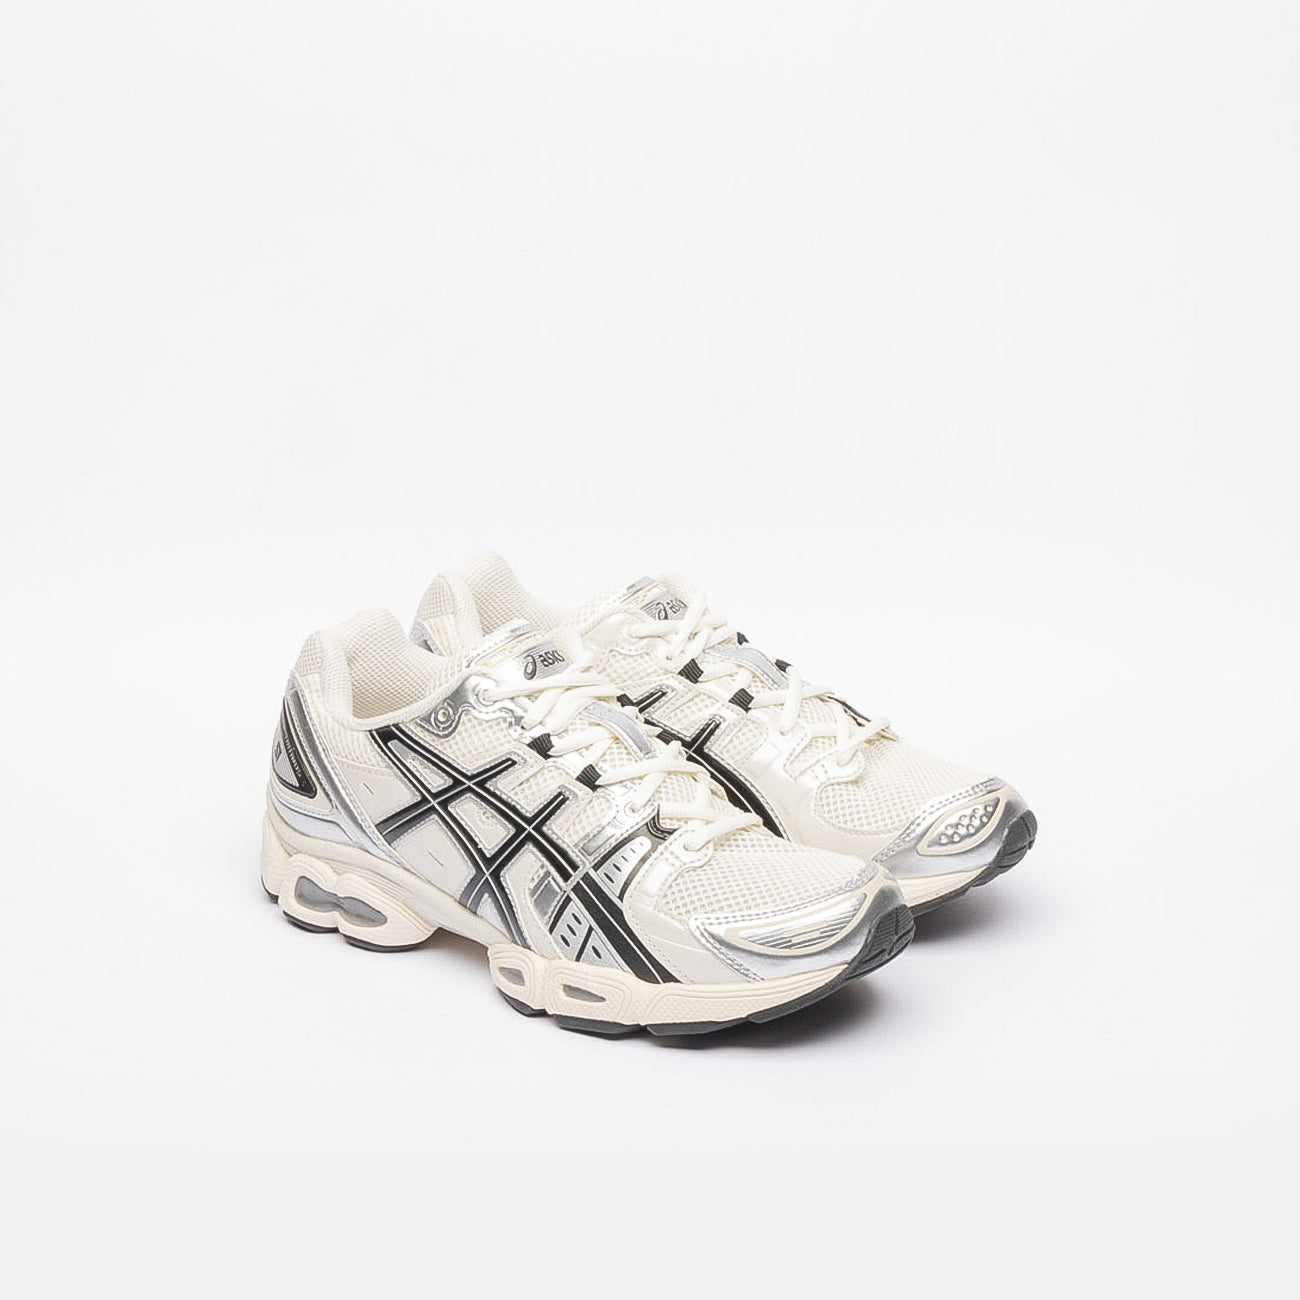 Sneaker unisex Asics Gel-Nimbus 9 in pelle nera e argento e tessuto bianco